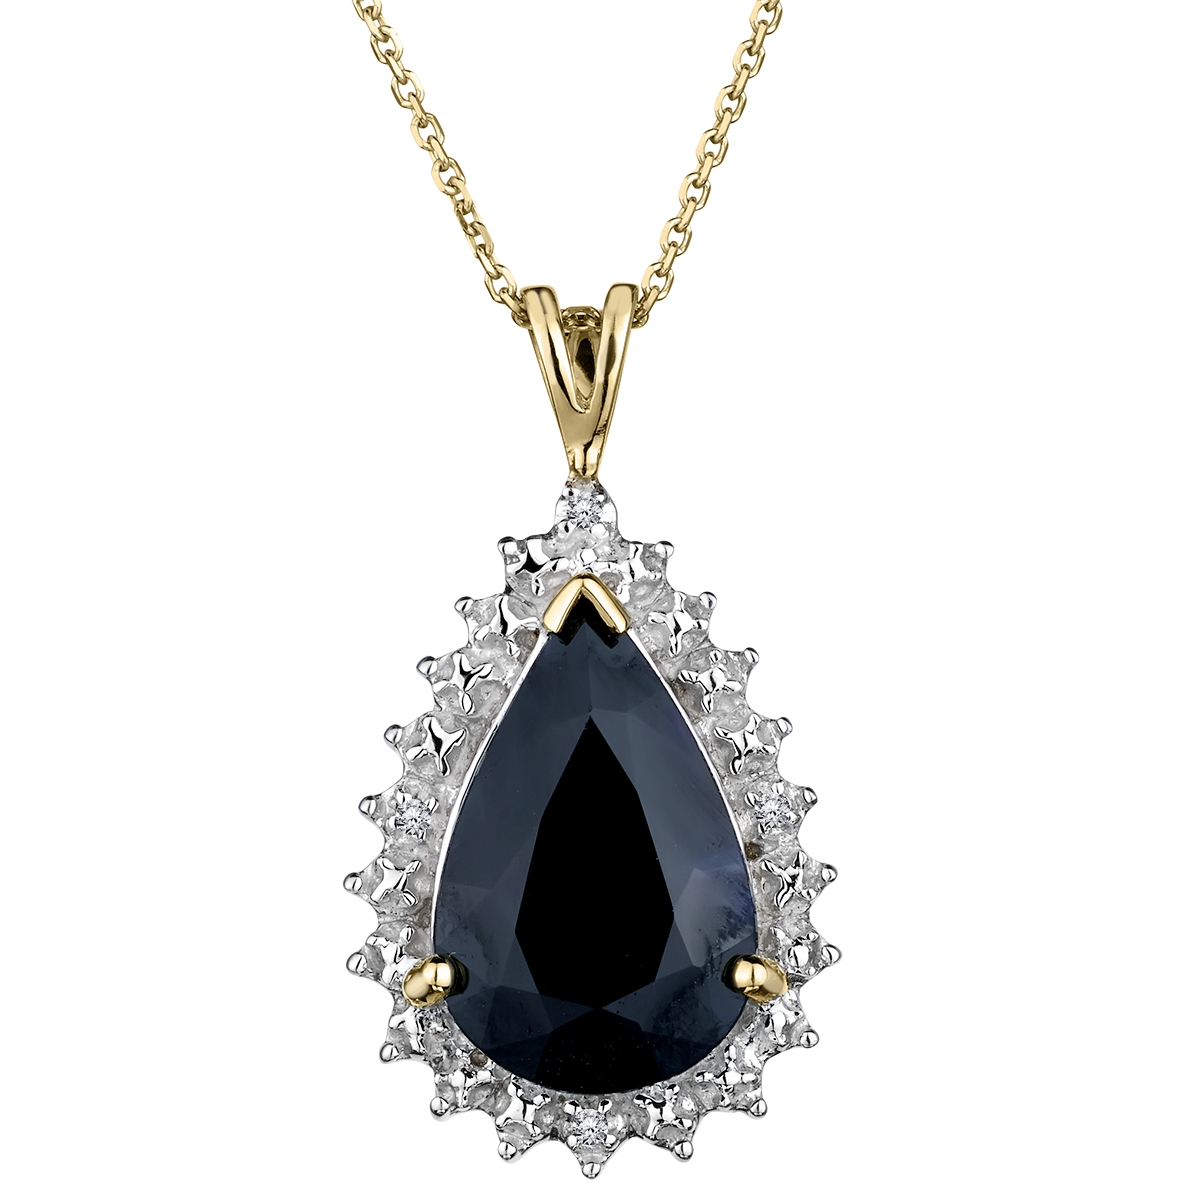 Genuine Dark Sapphire & Diamond Pendant,  10kt Yellow Gold. Necklaces and Pendants. Griffin Jewellery Designs. 